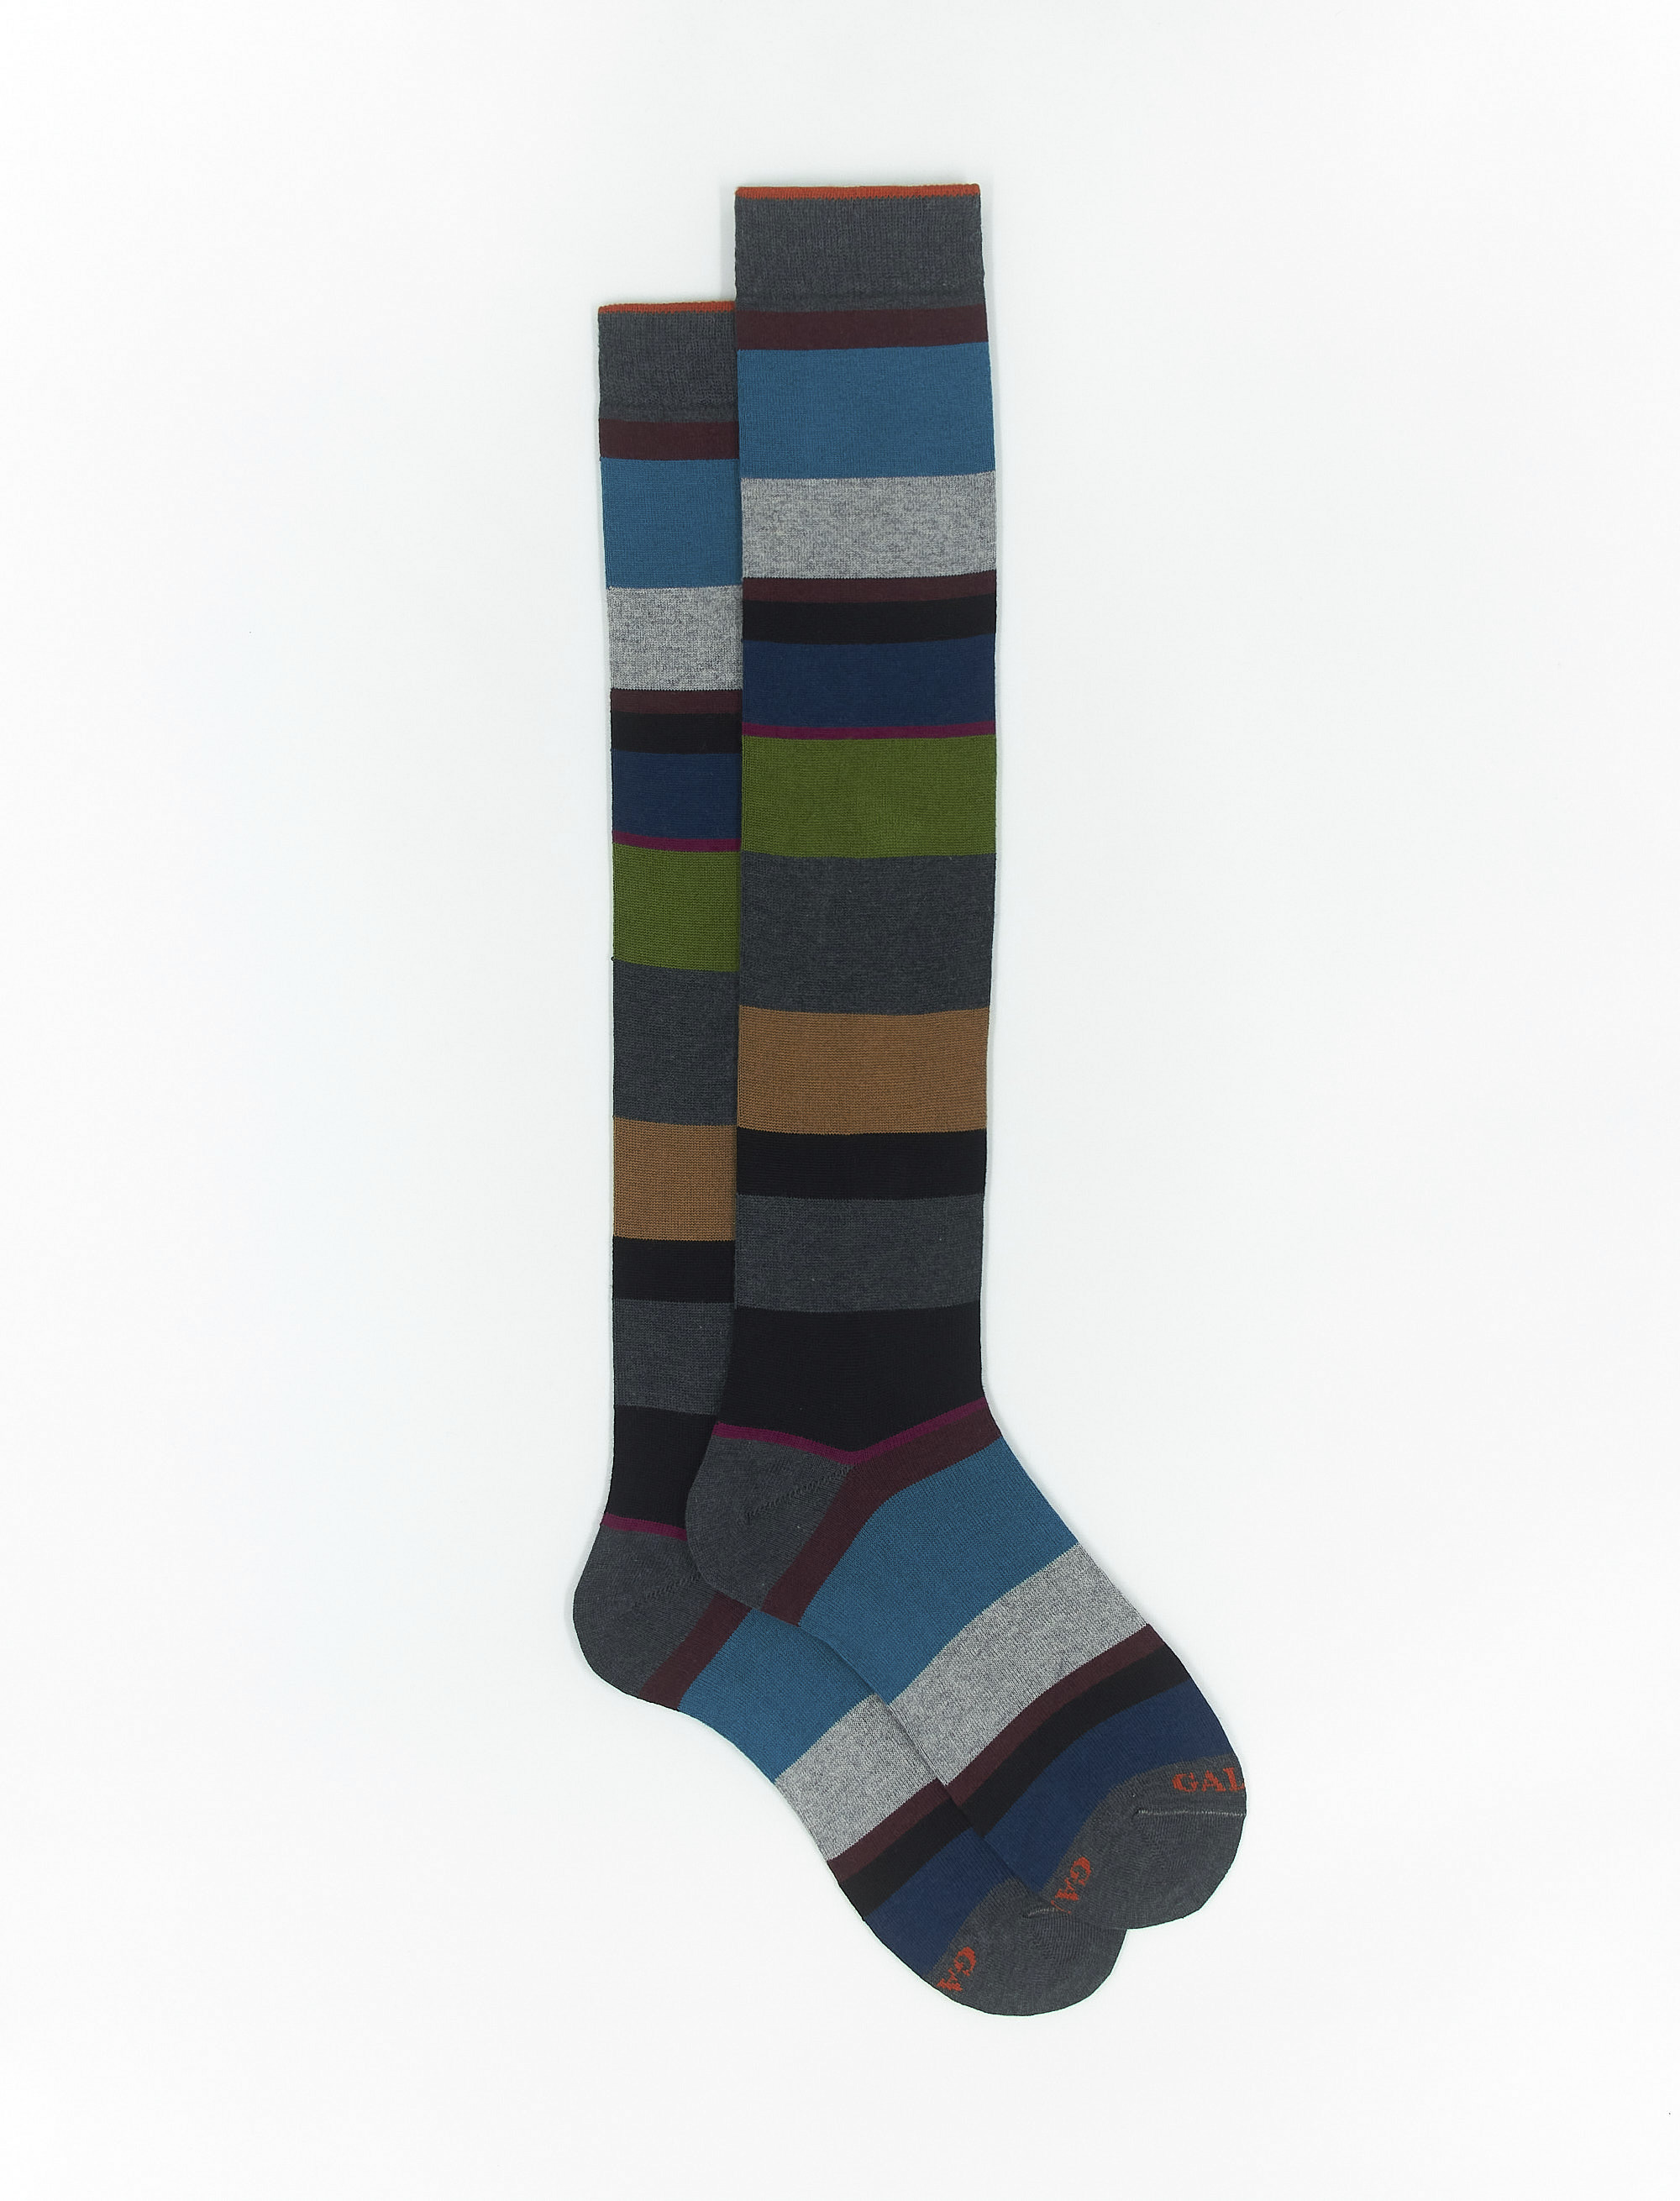 Calze lunghe donna cotone e cashmere sasso righe multicolor macro - Gallo 1927 - Official Online Shop